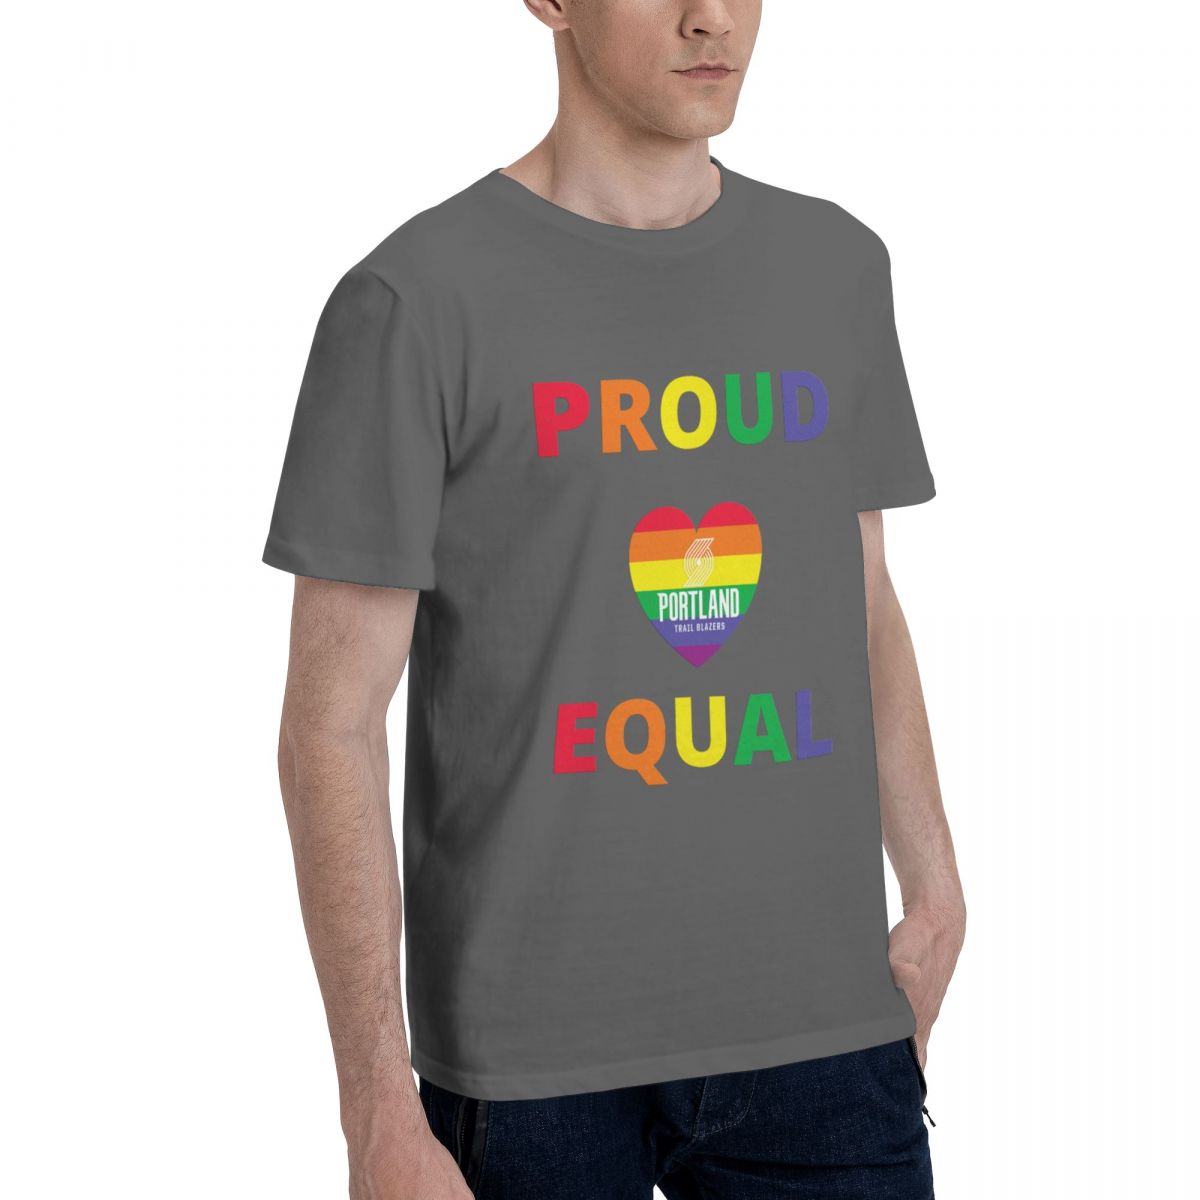 Portland Trail Blazers Proud & Equal Pride Cotton Men's T-Shirt